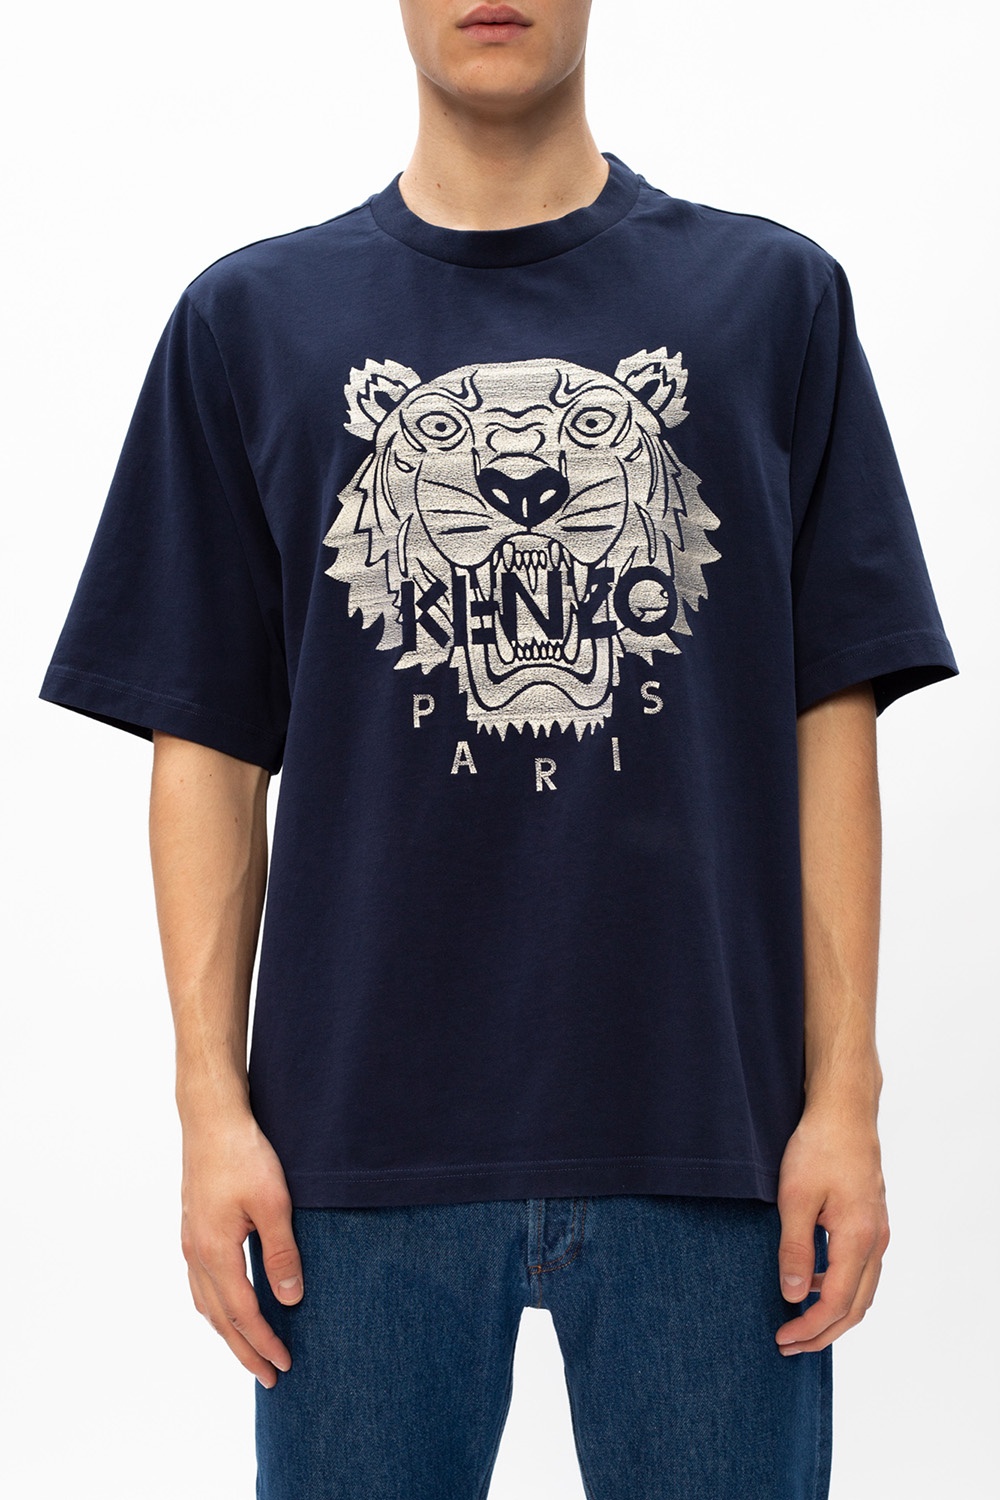 Kenzo發佈全新「Tiger Tail Collection」限定系列｜迎來Nigo為品牌創作